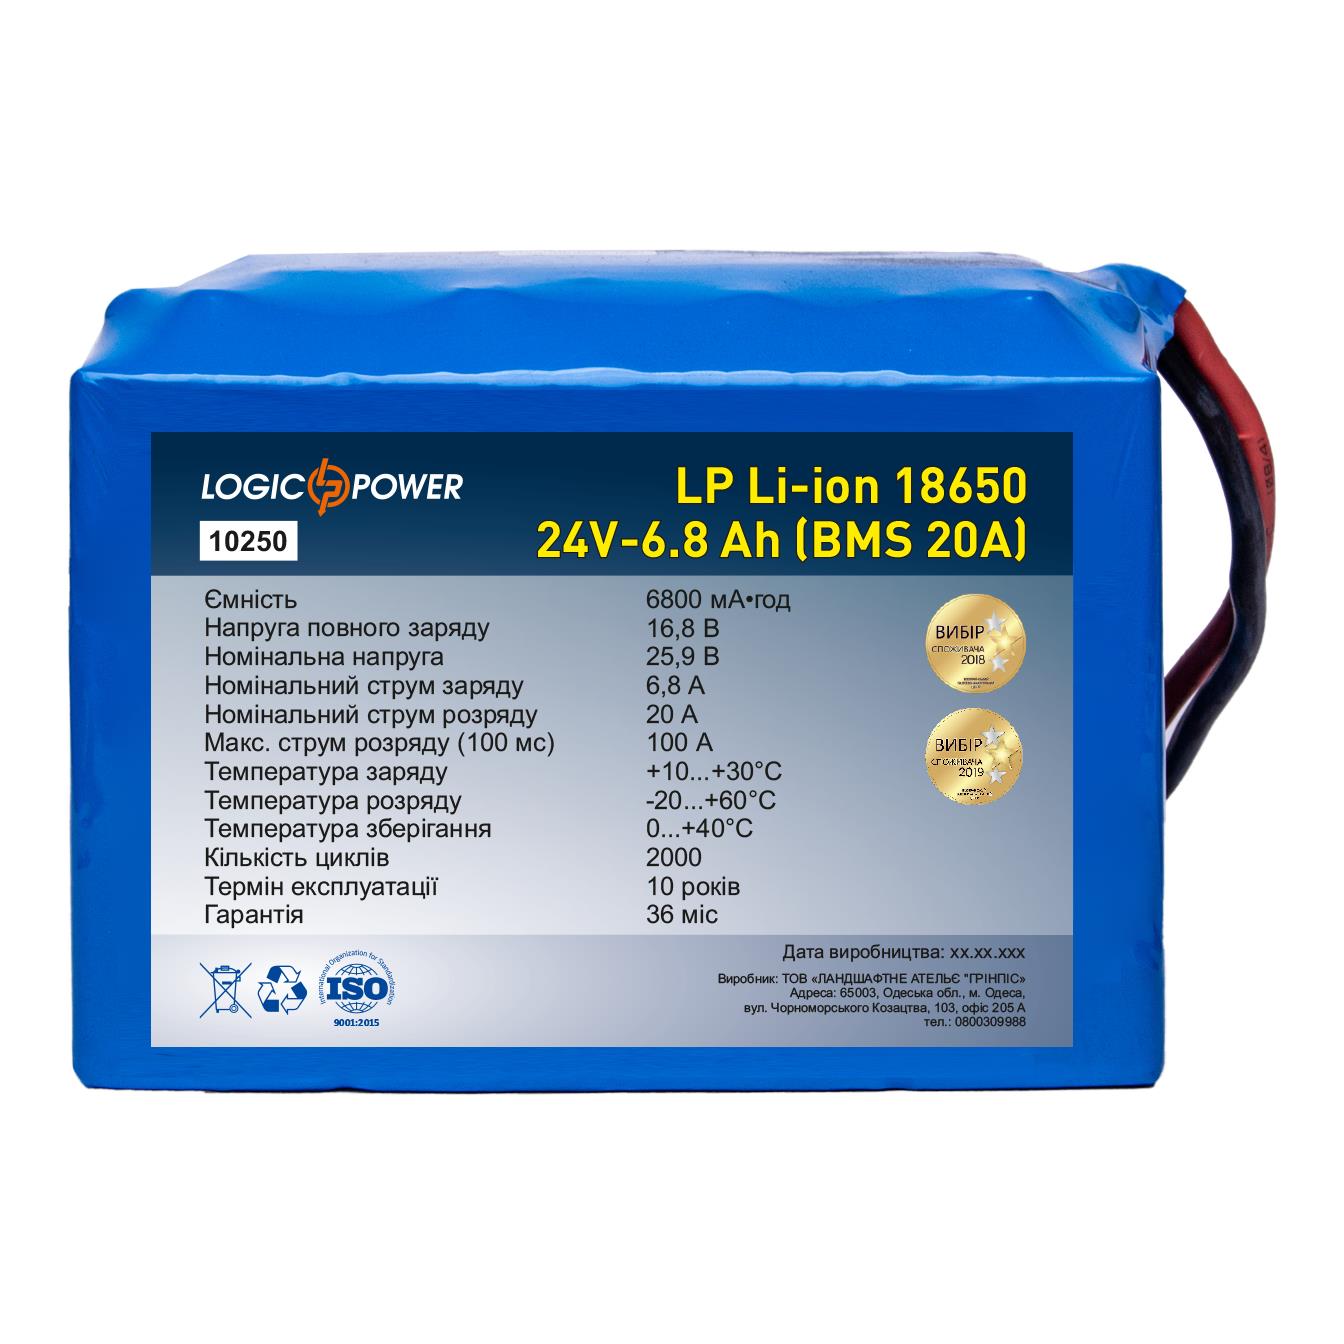 Аккумулятор Li-Ion LogicPower LP Li-ion 18650 24V - 6.8 Ah (BMS 20A) (10250)